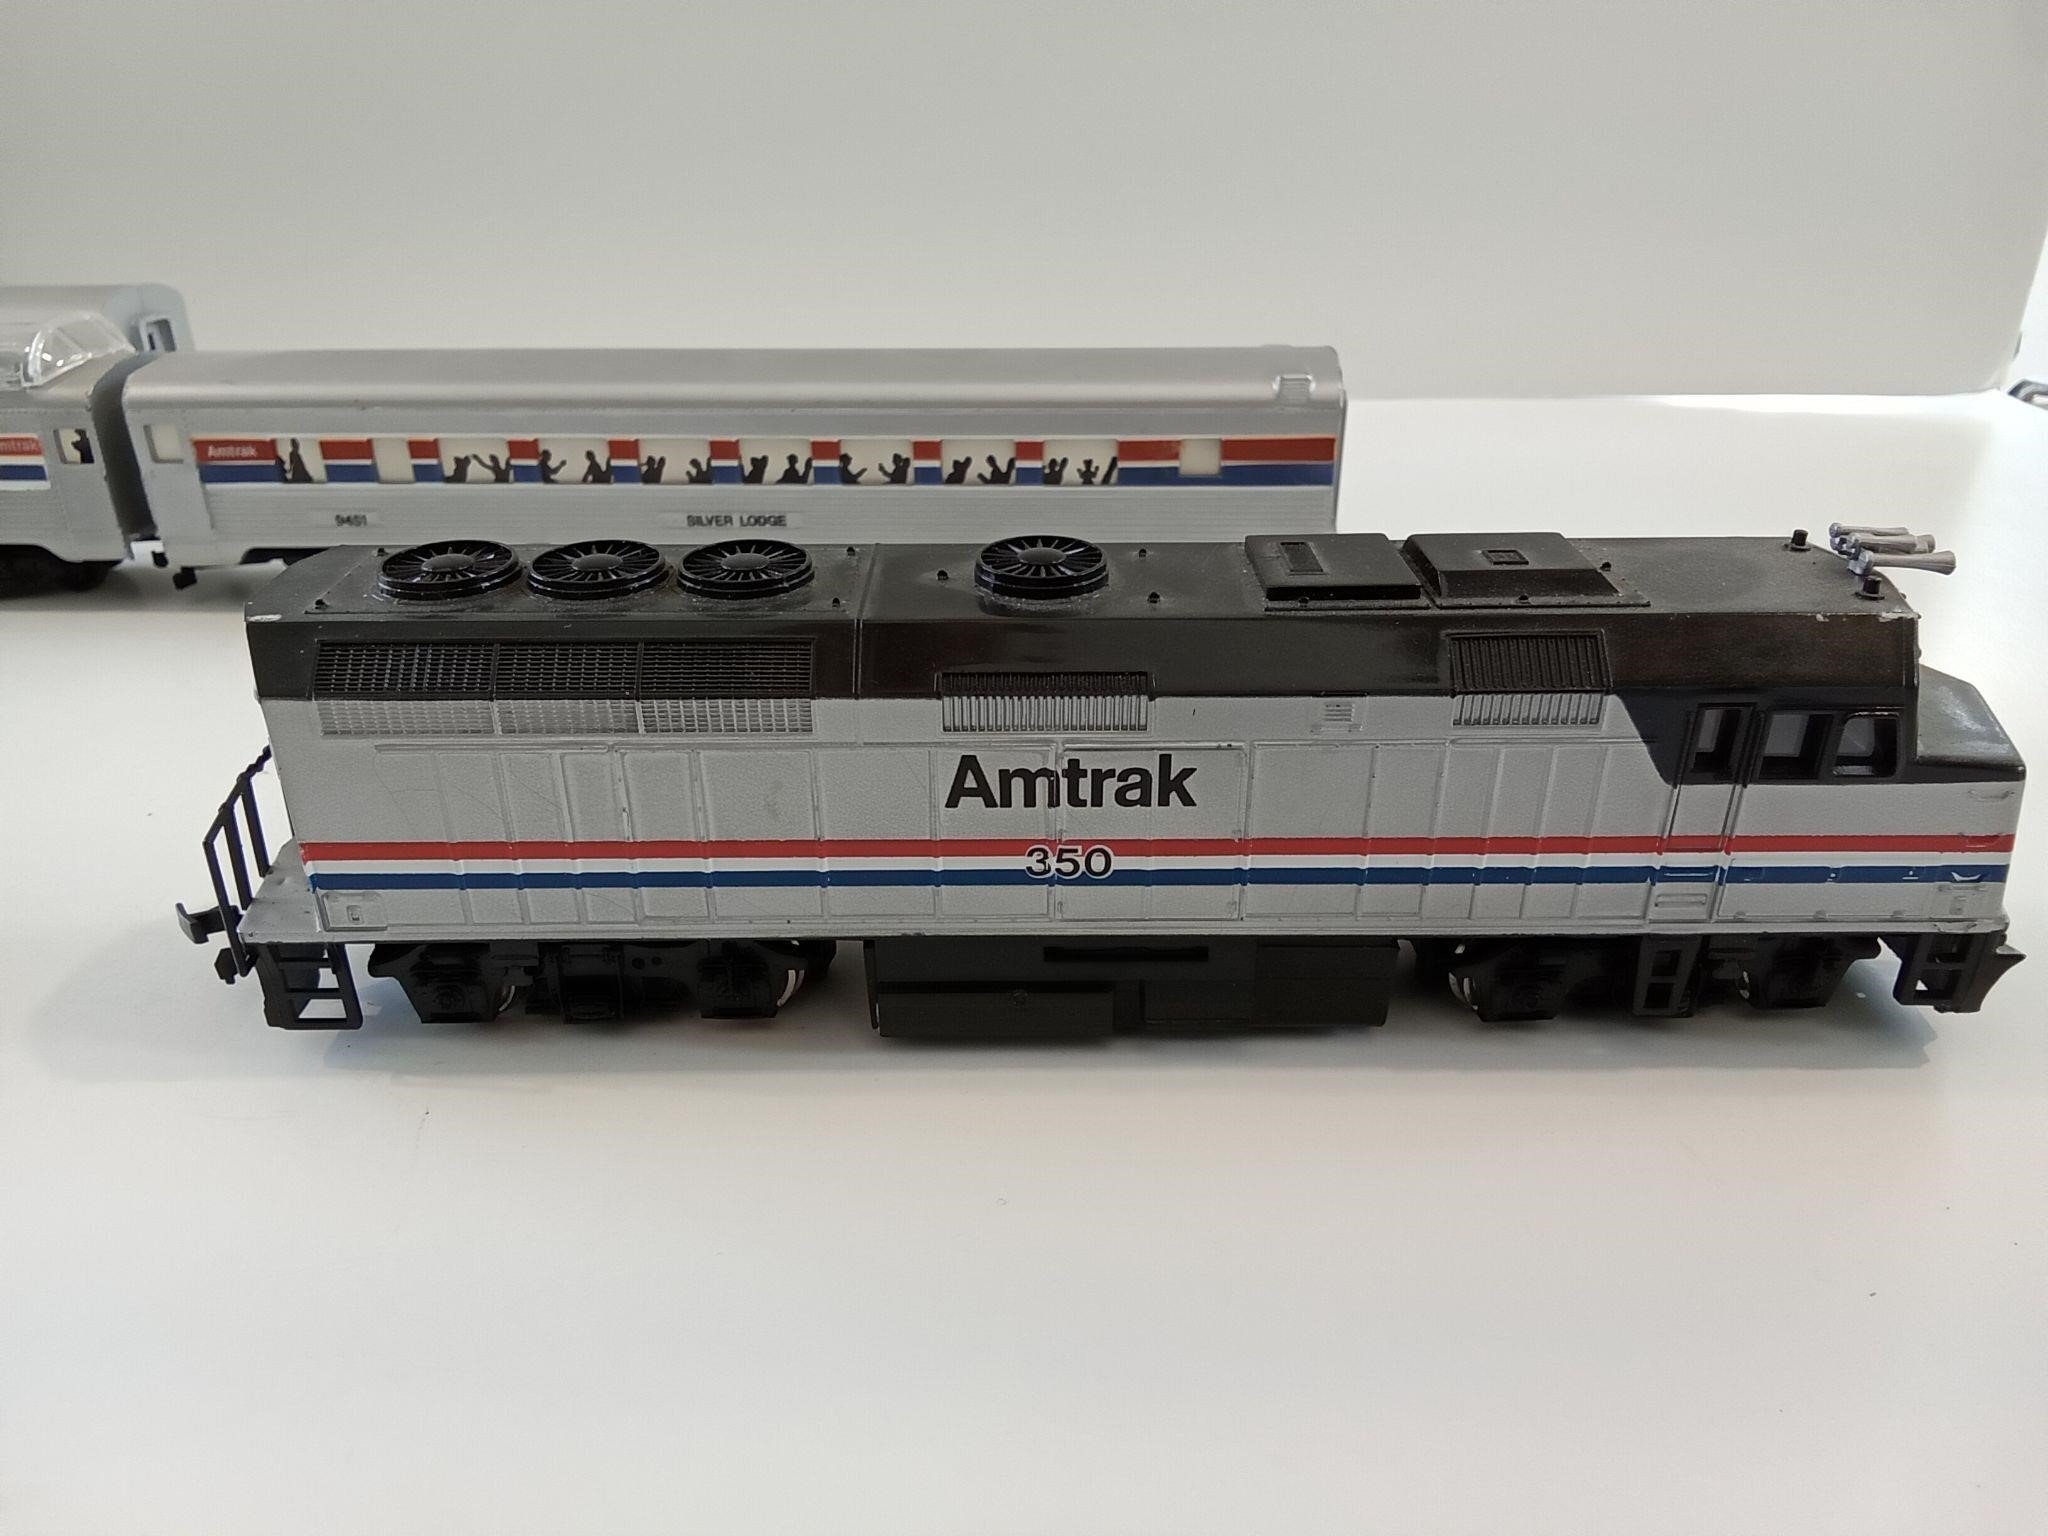 Amtrak Passenger Train with 2 Engines